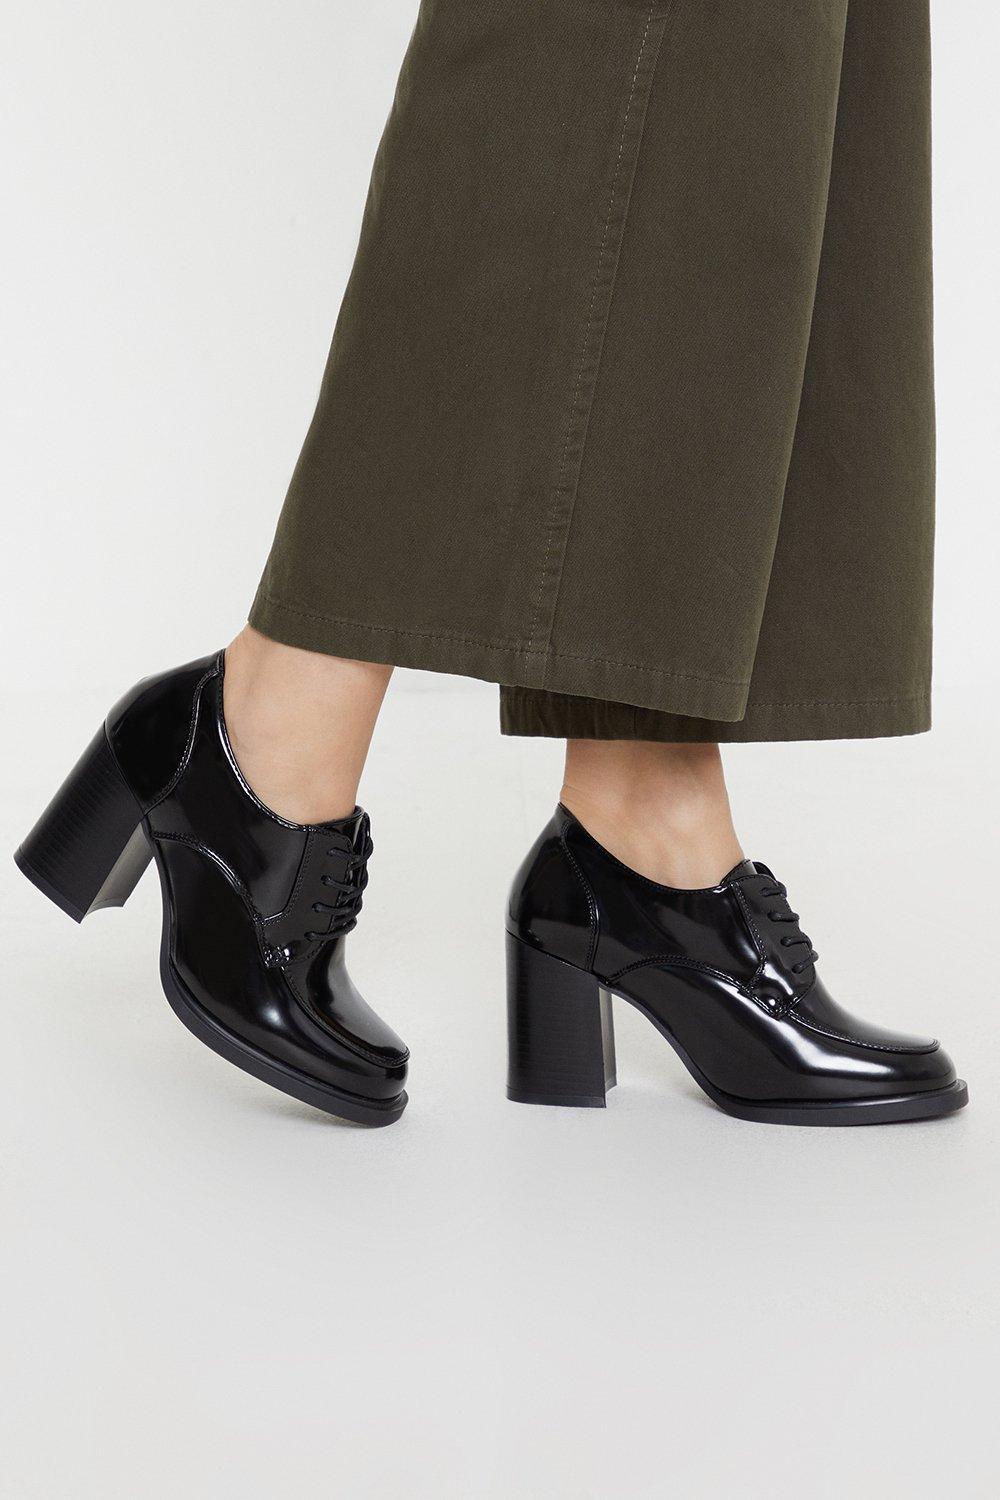 Women’s Principles: Lara Front Lace Up High Block Heel Shoe - true black - 4